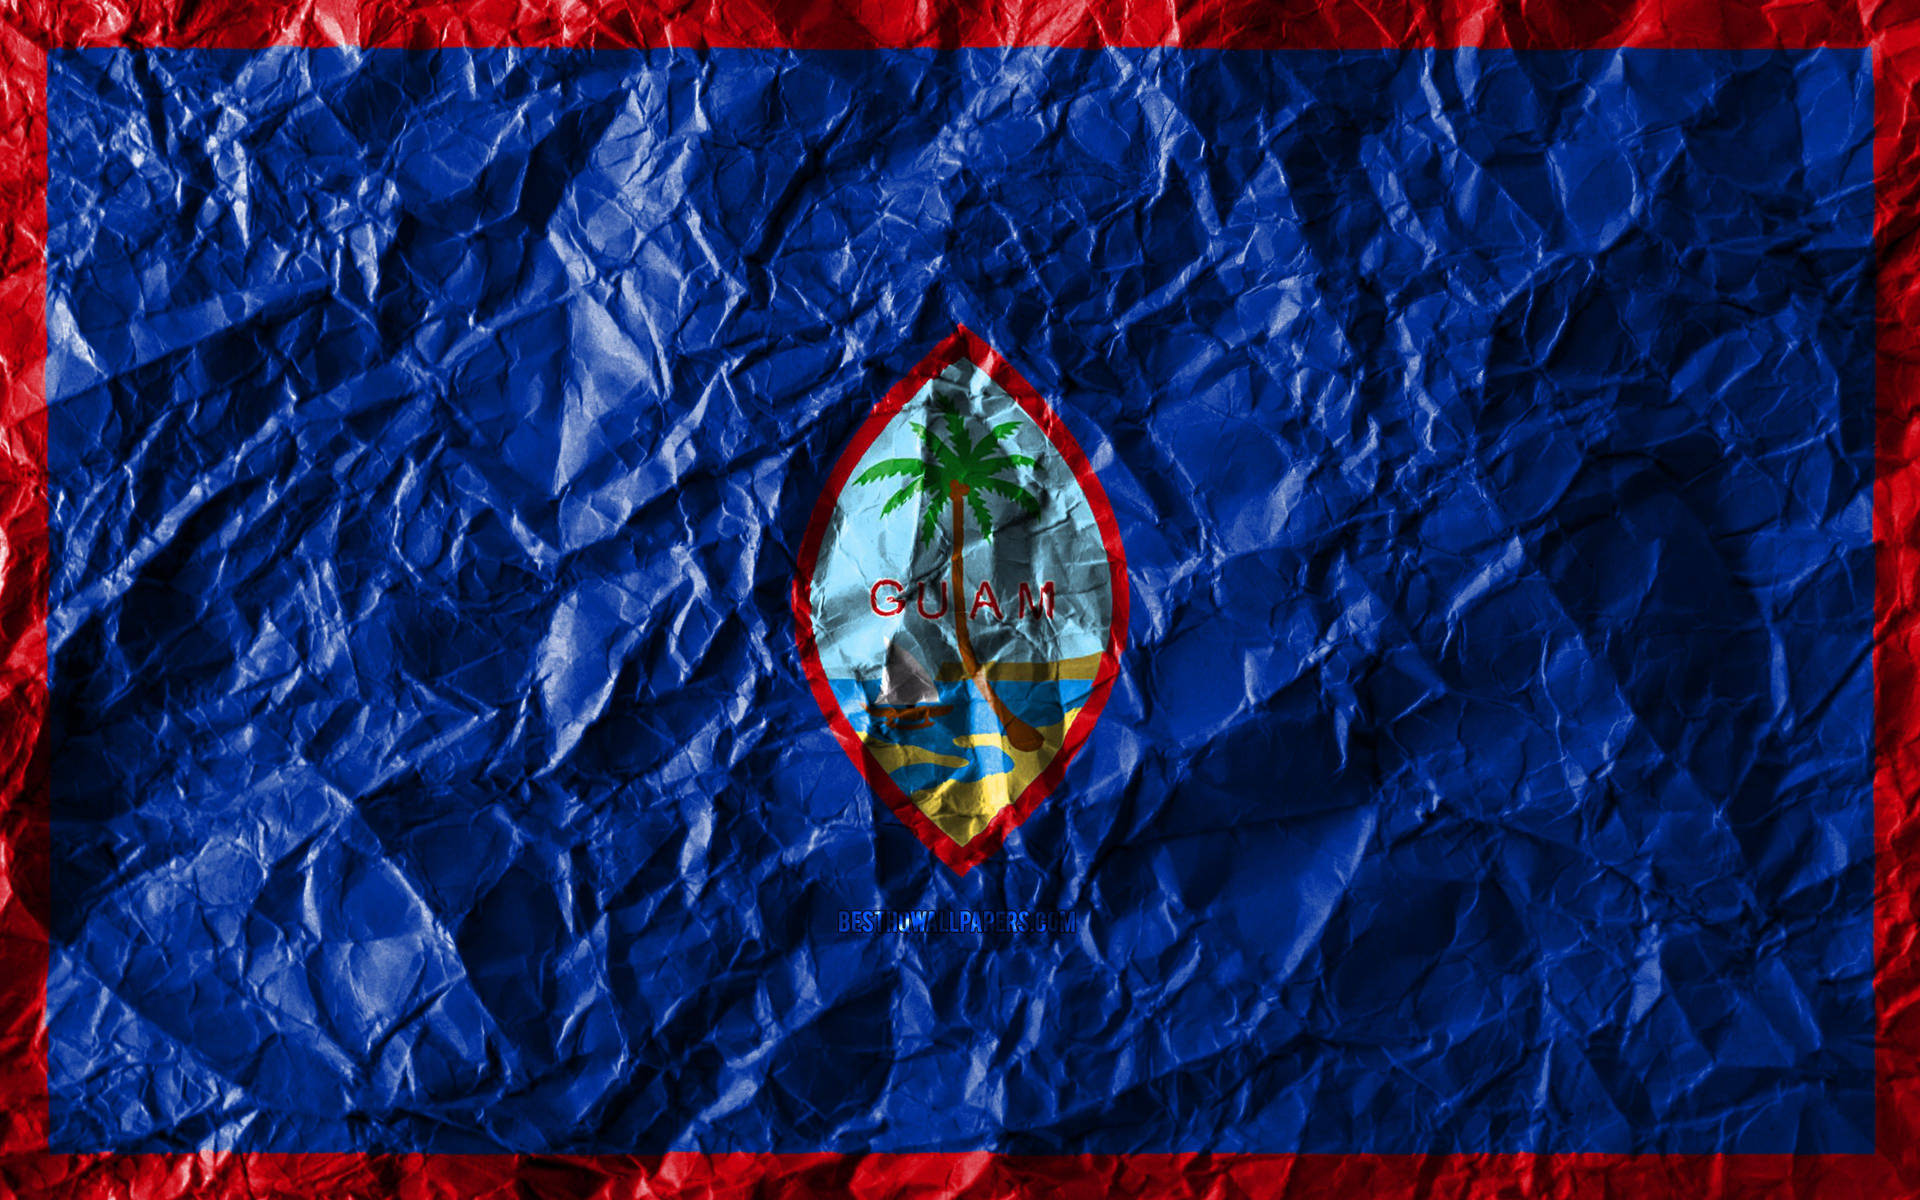 Banderade Guam Arrugada Fondo de pantalla